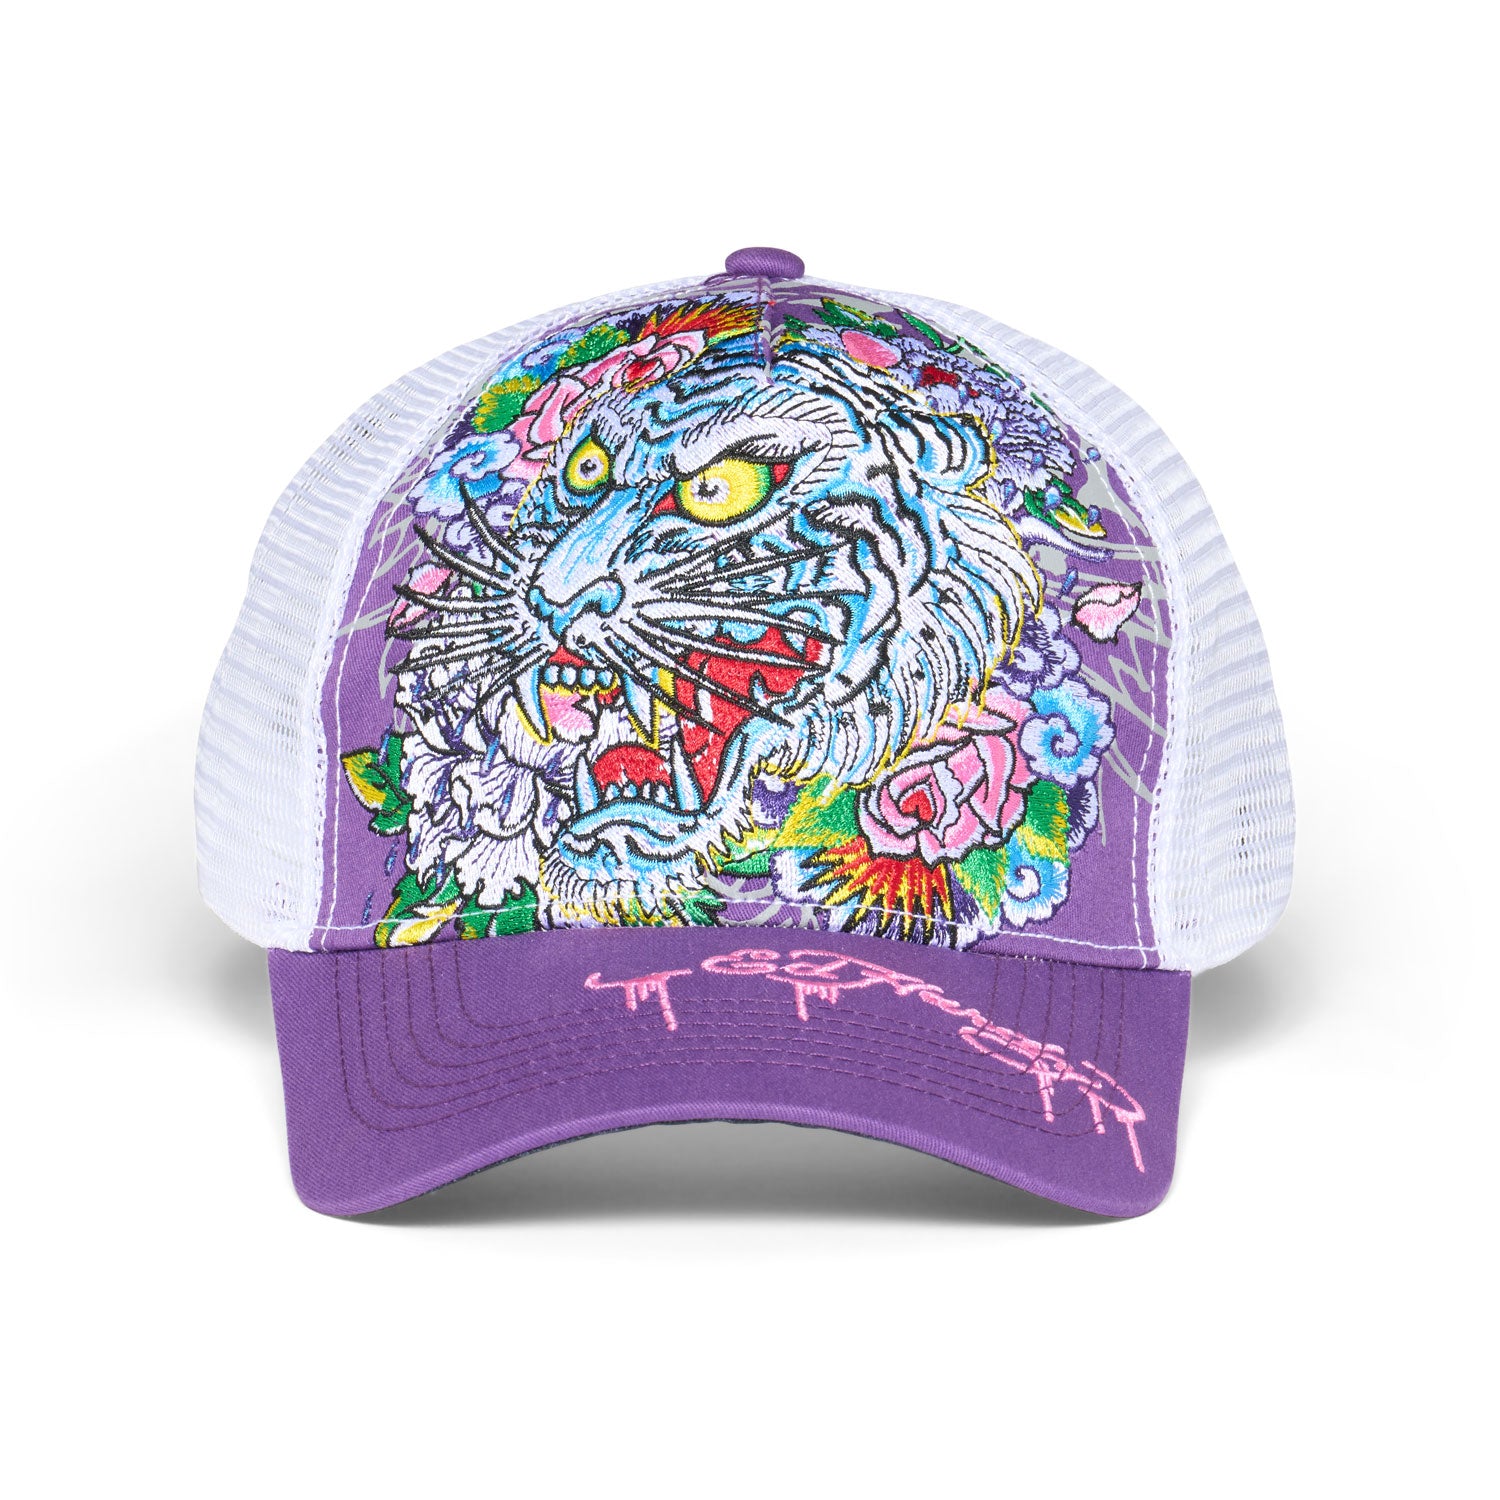 Embroidered Koi Fish Hat